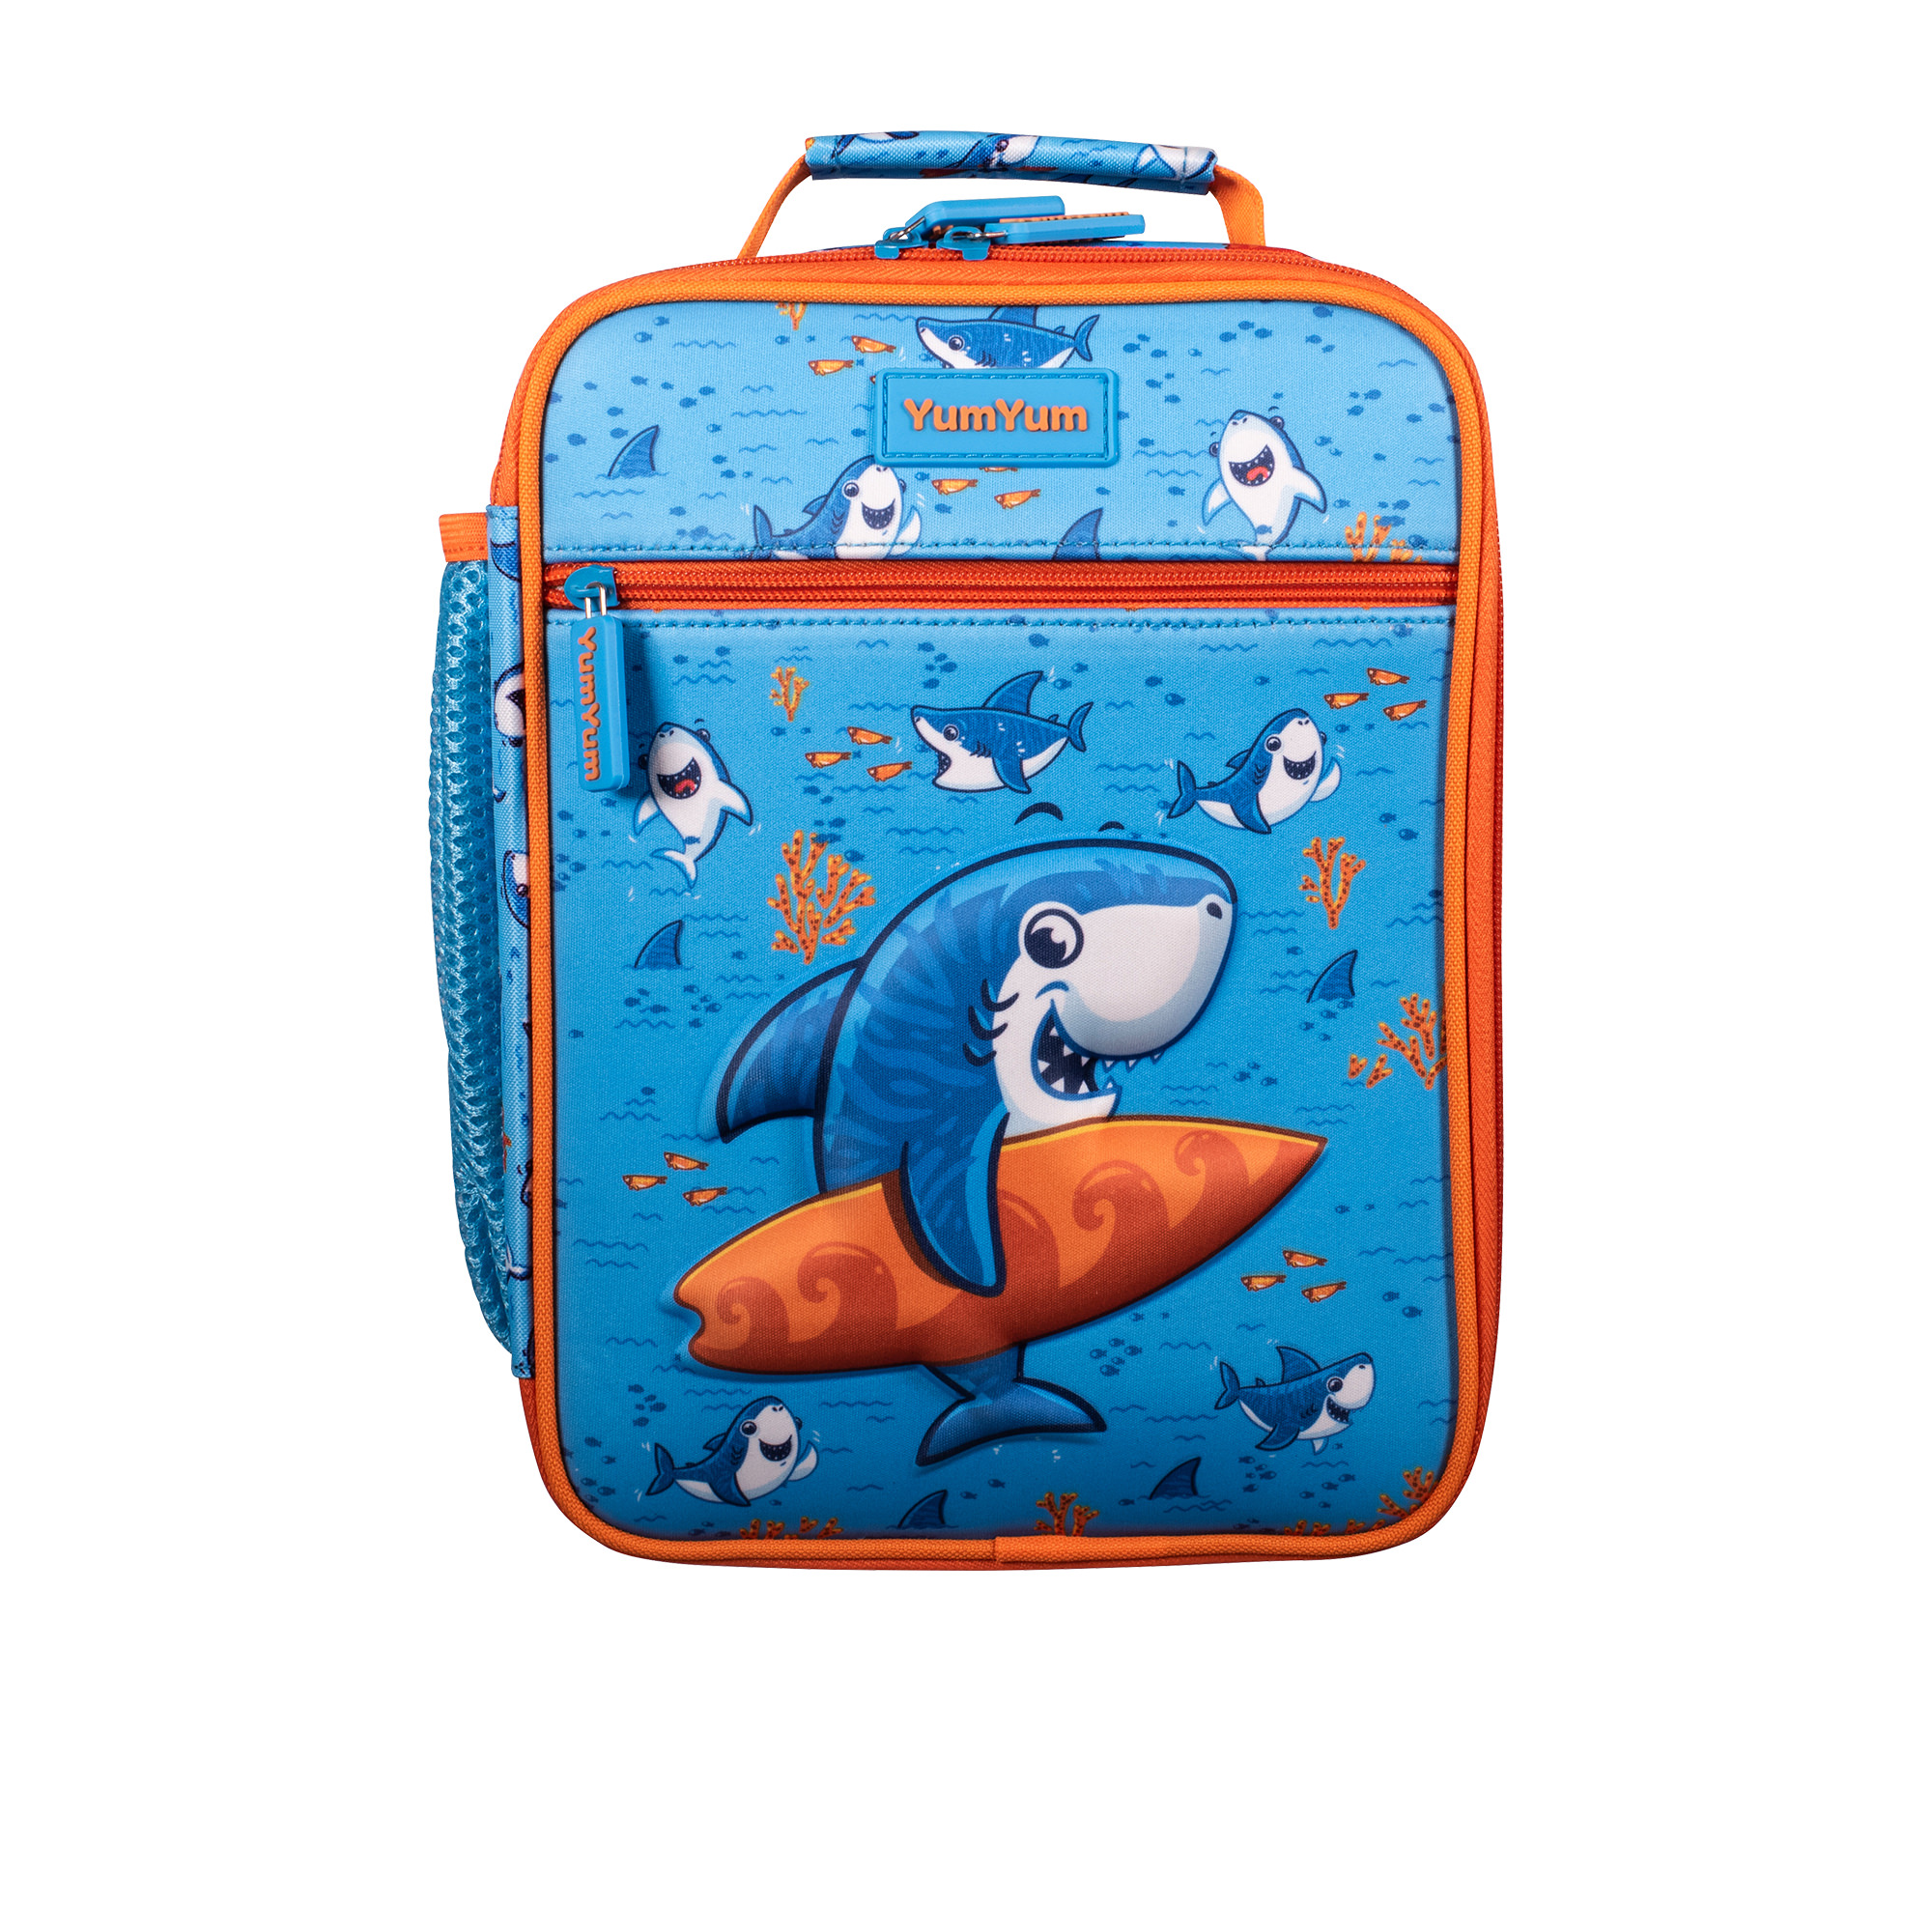 Avanti YumYum Kids Insulated Lunch Bag 3D Surfing Sharkie Image 1